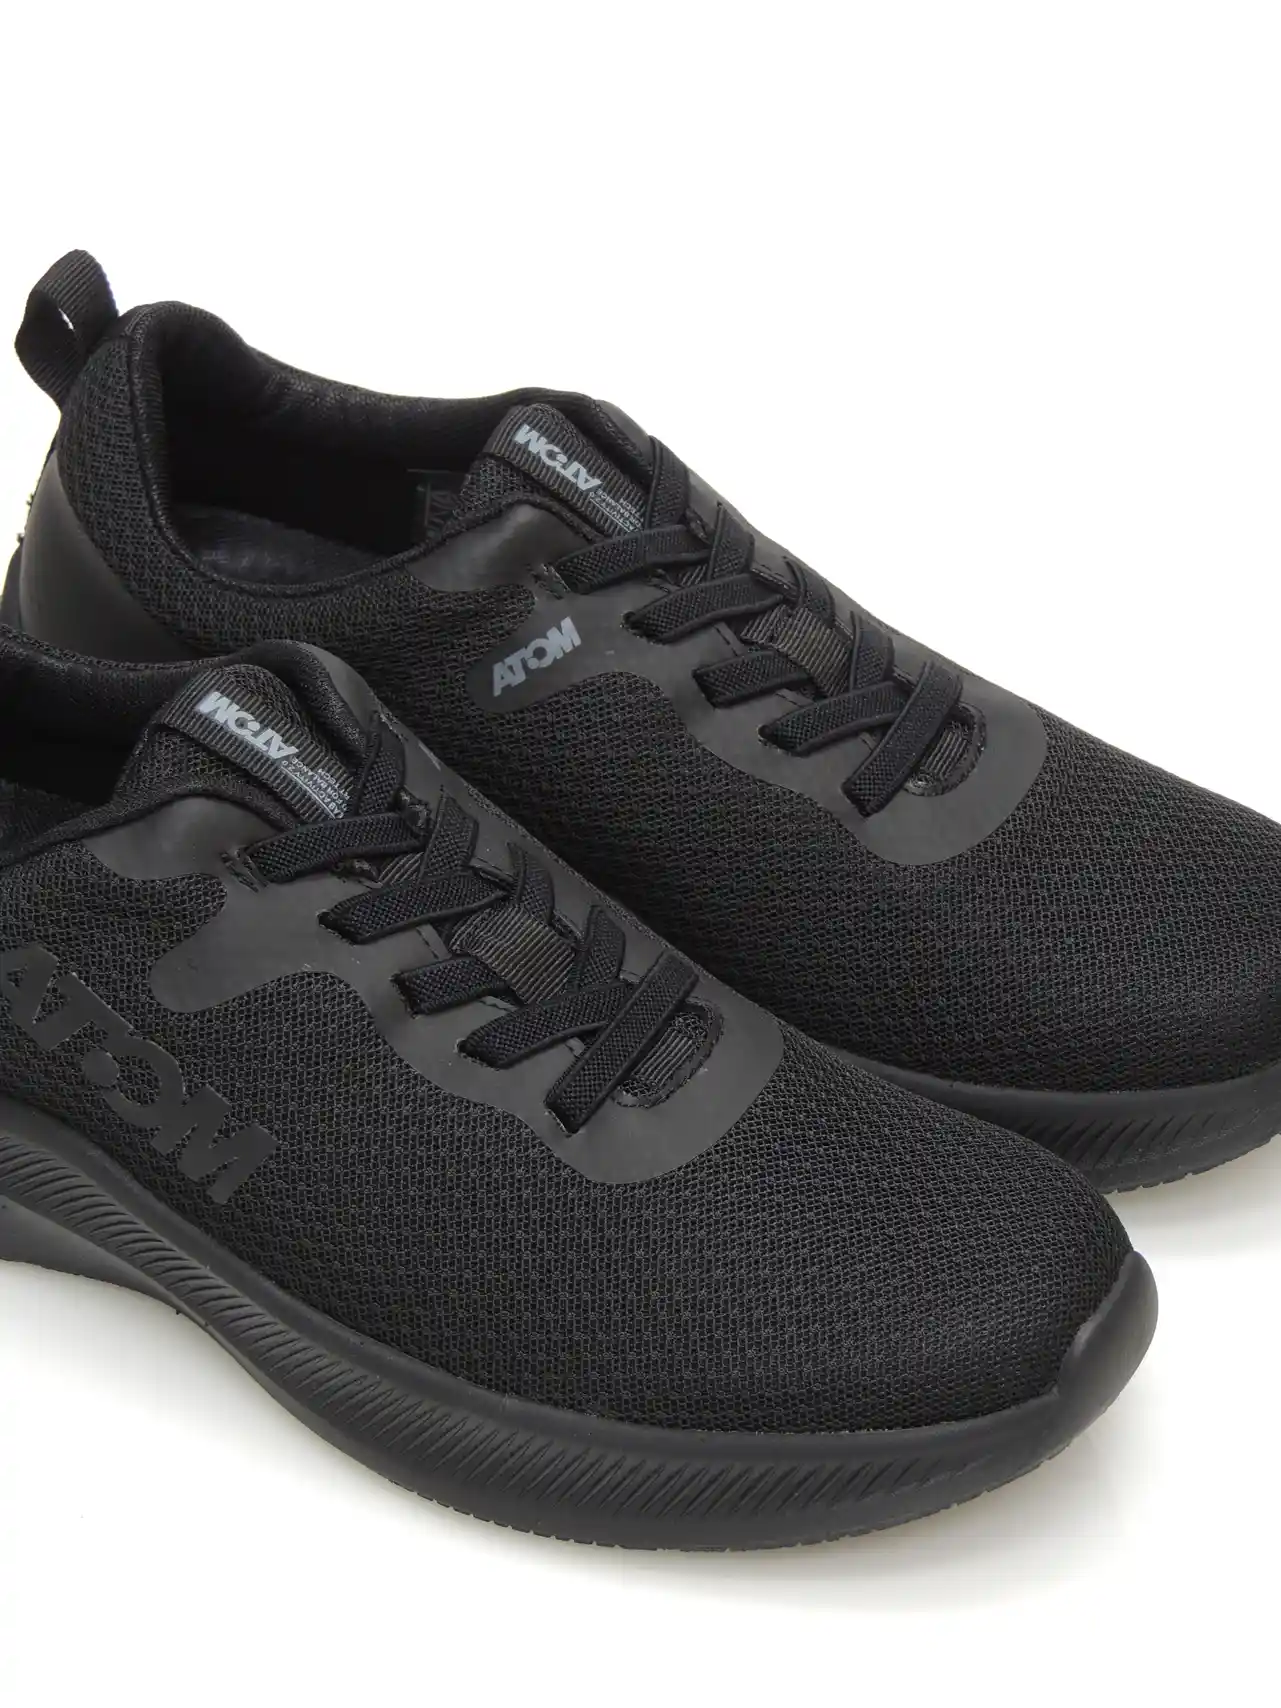 sneakers--fluchos-at127-textil-negro